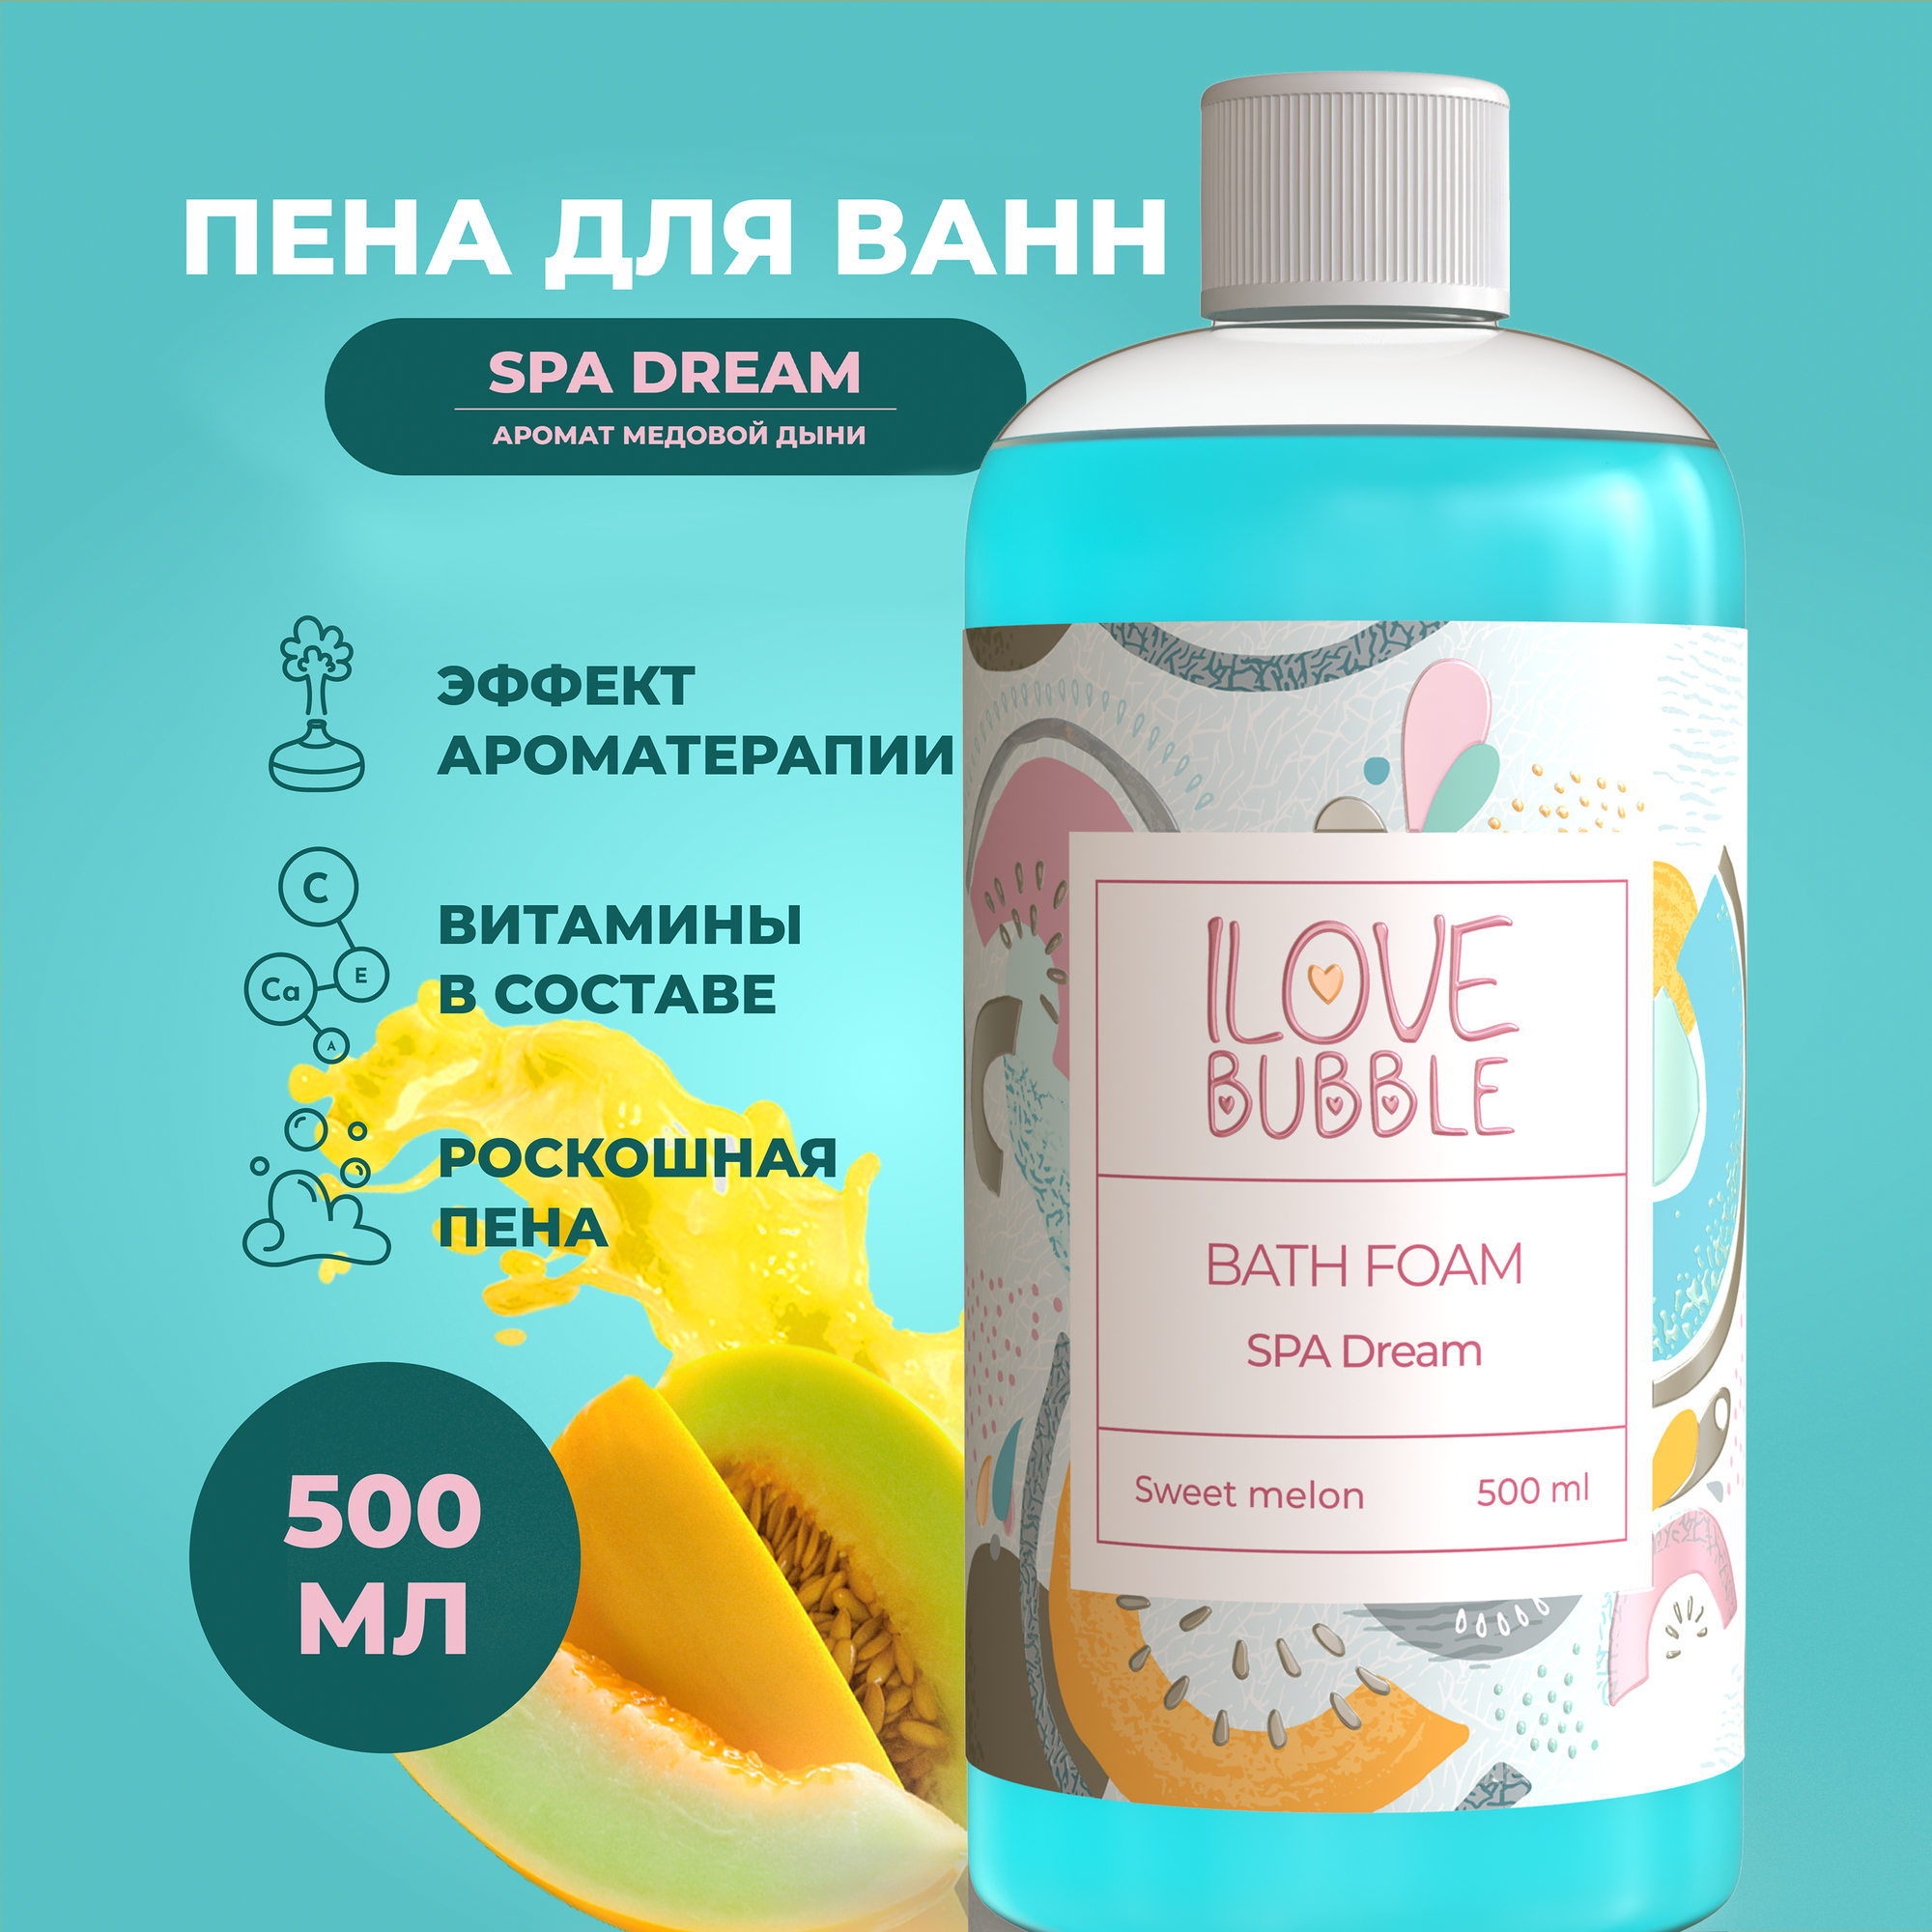 ILOVE mg, Натуральная пена для ванны с ароматом спелой дыни, спа-уход. Объем 500 мл.